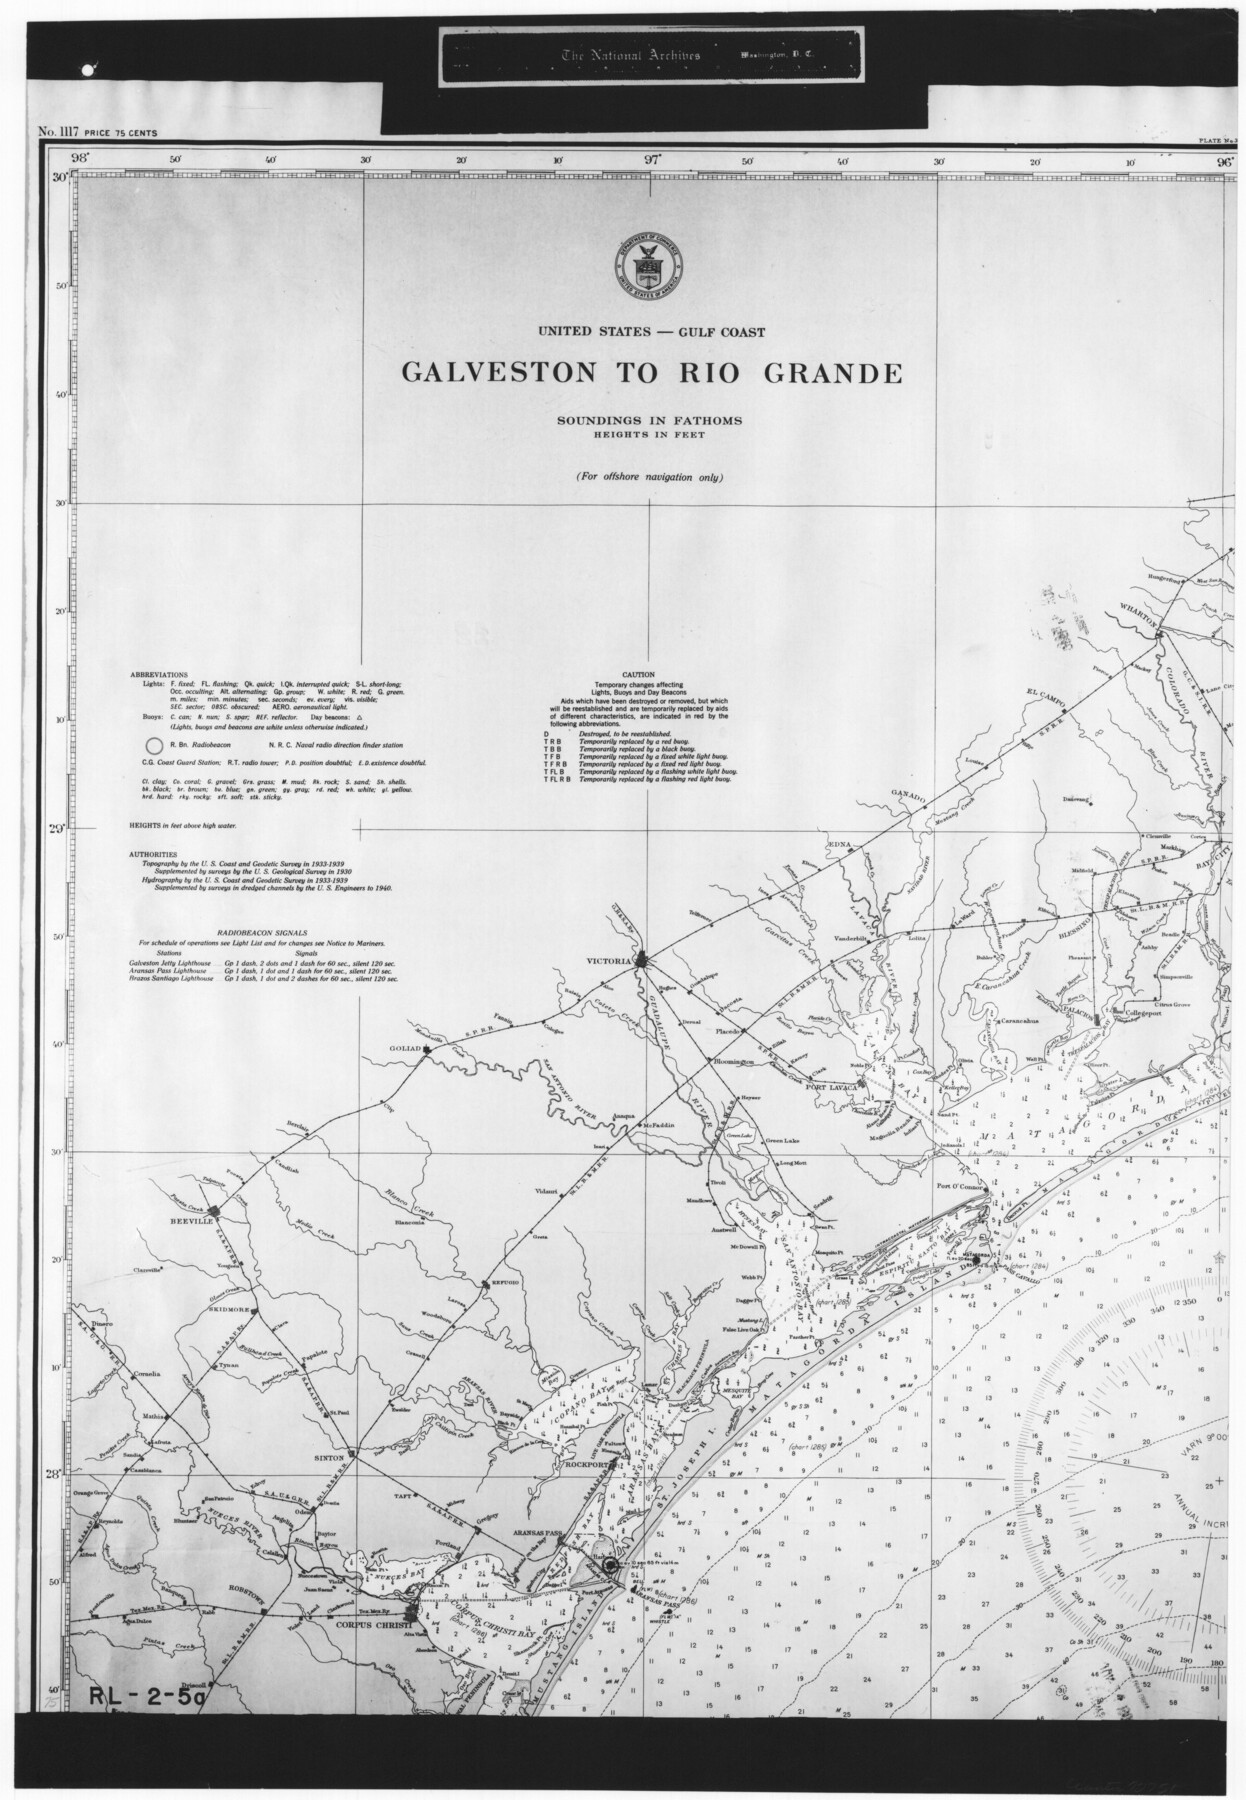 72751, United States - Gulf Coast - Galveston to Rio Grande, General Map Collection